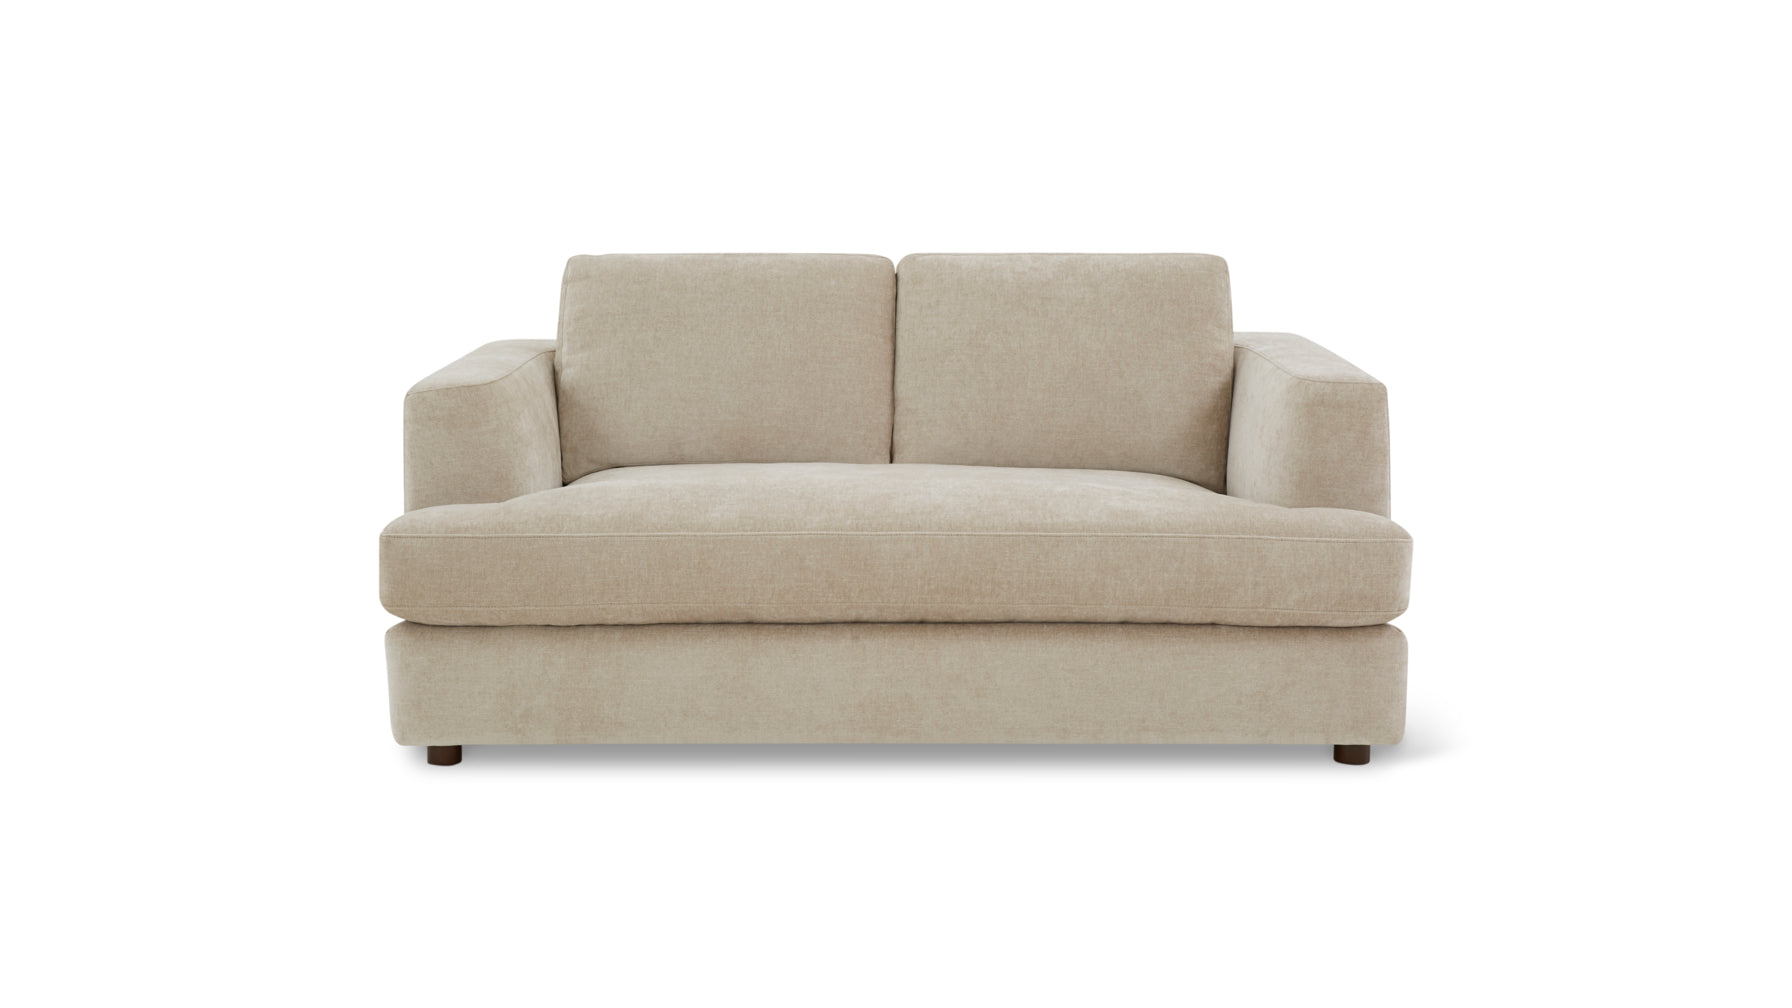 Good Company Sofa, 2 Seater, Cashew - Image 1